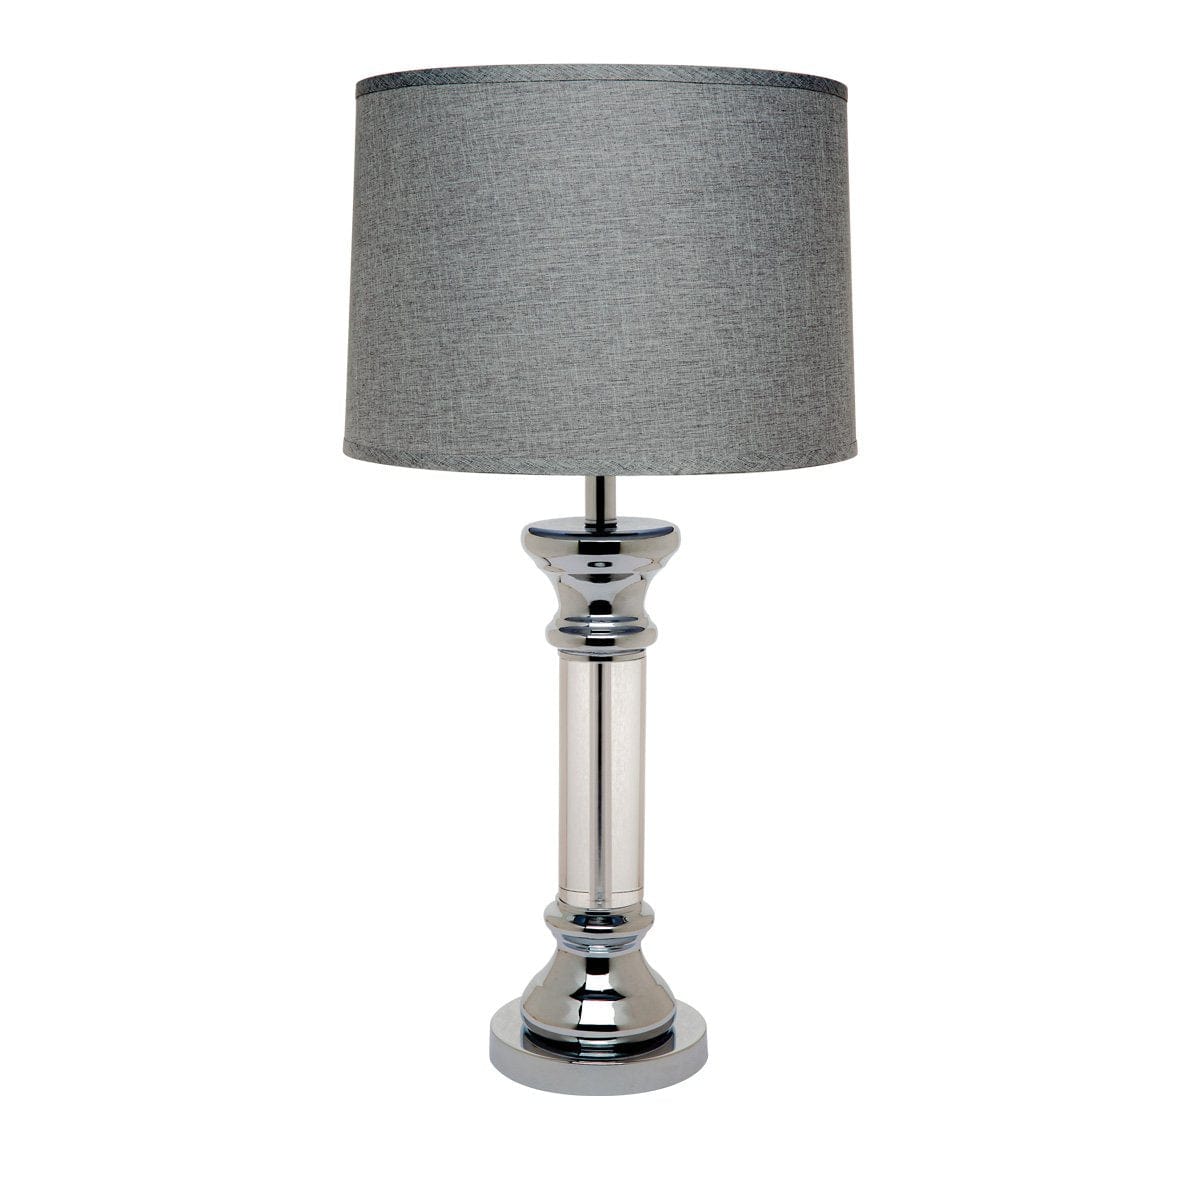 CAFE LIGHTING & LIVING Table Lamp Figaro Chrome Table Lamp - Silver 12304